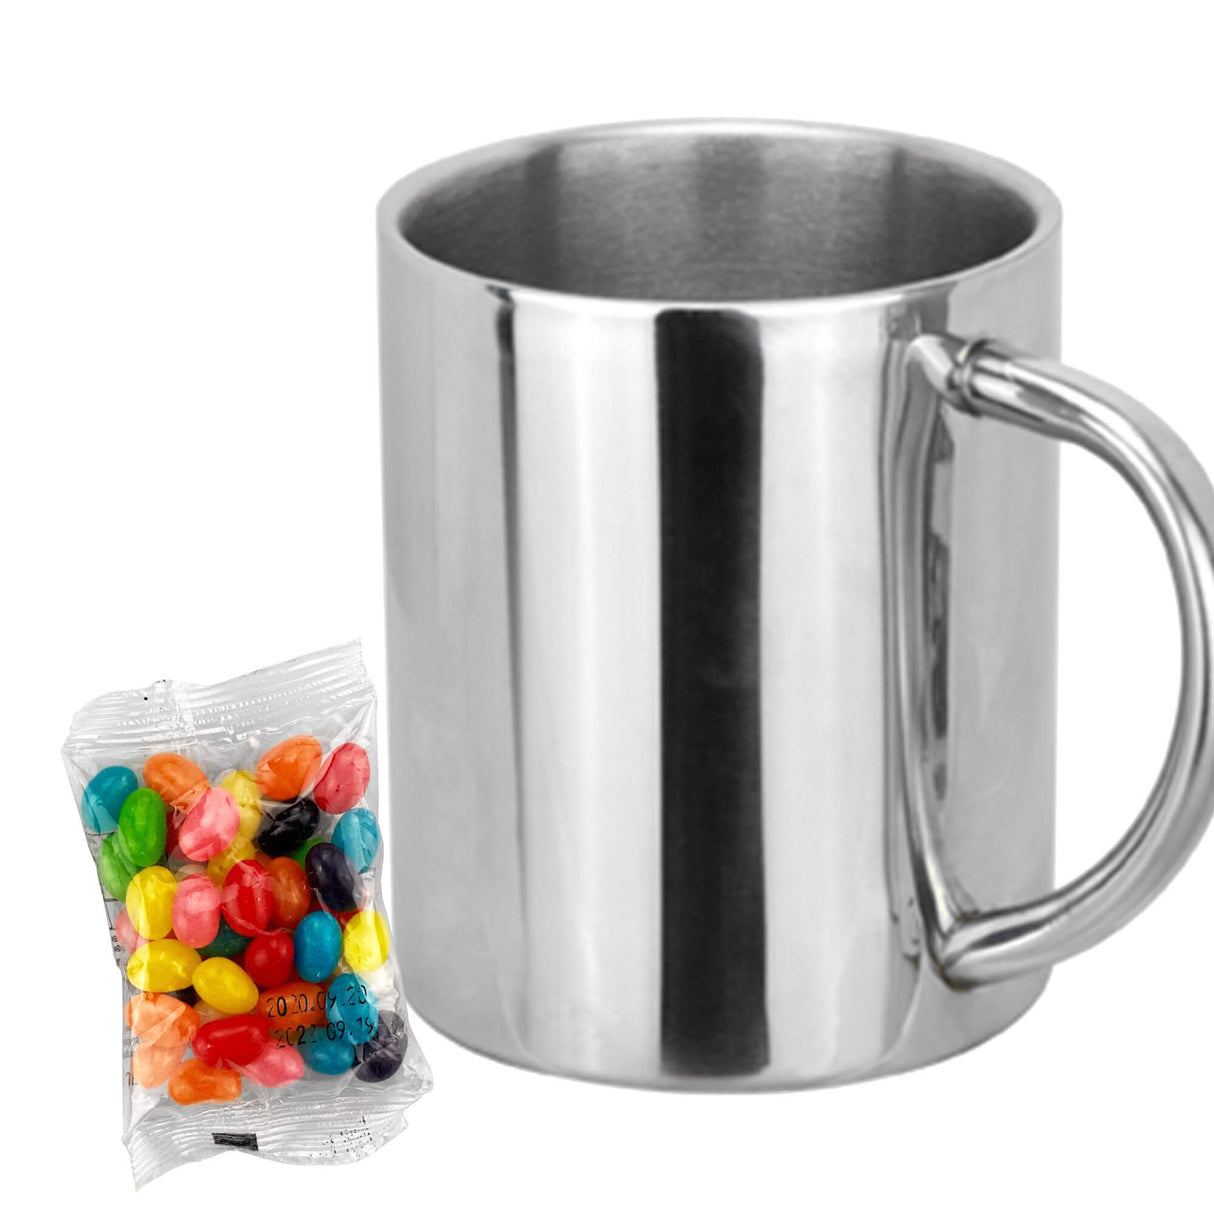 Jelly Bean In Alto Mug